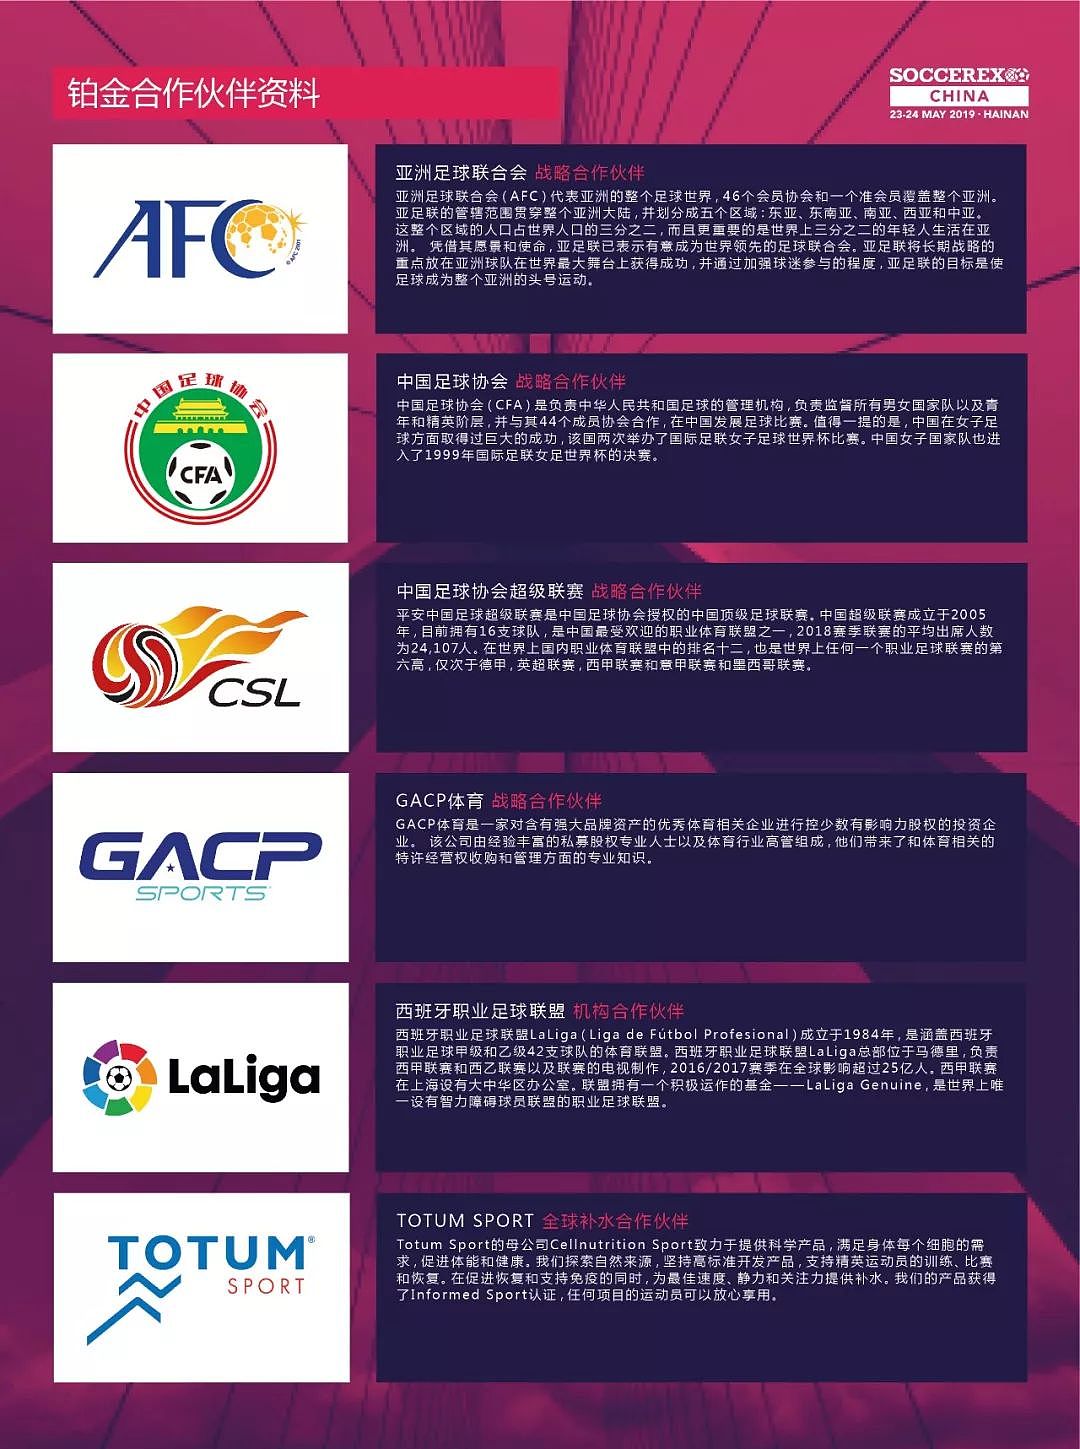 Soccerex公布中国全球足球产业峰会最终阵容 - 8